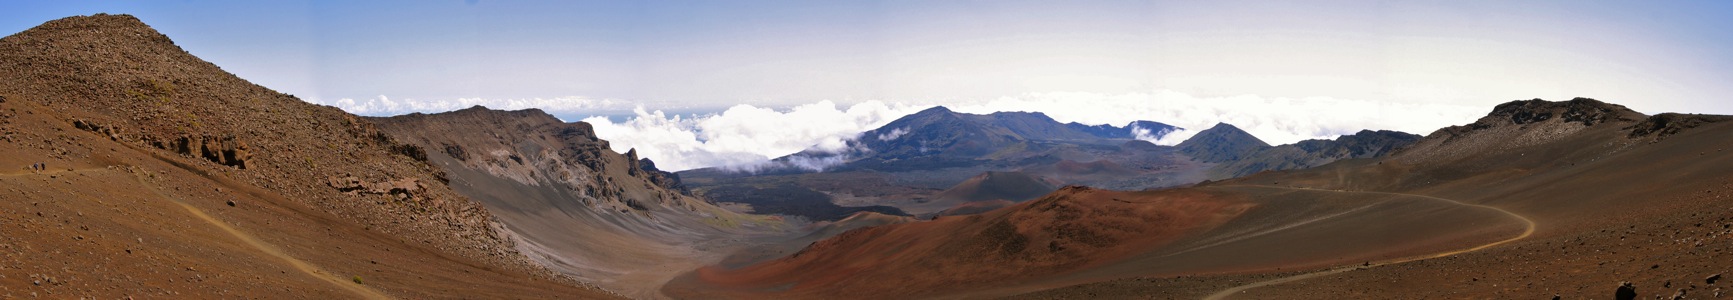 Haleakala Crater - 4/2007